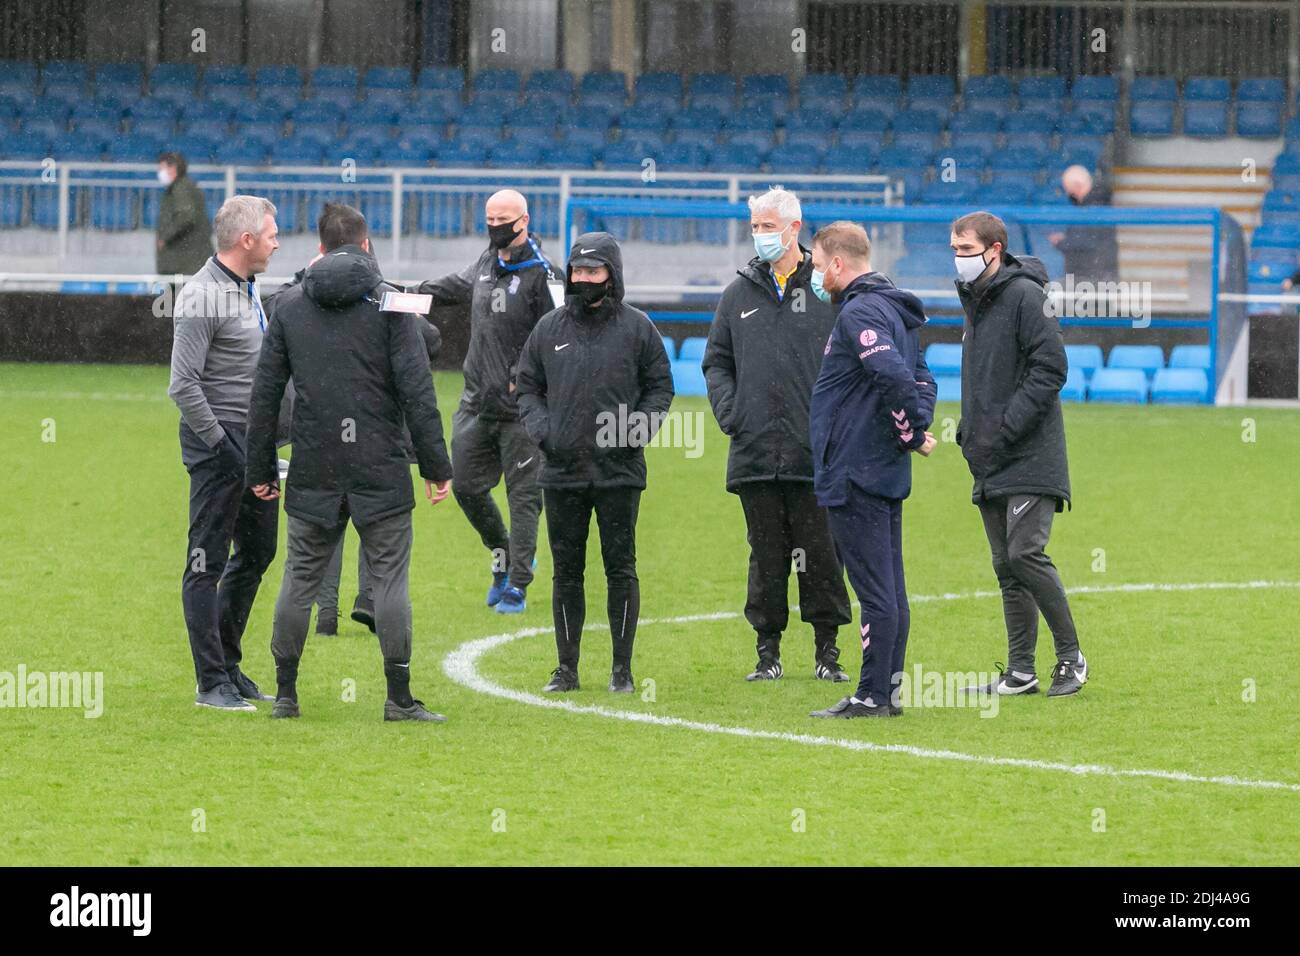 Football pitch inspection on a rainy day, UK Stock Photo